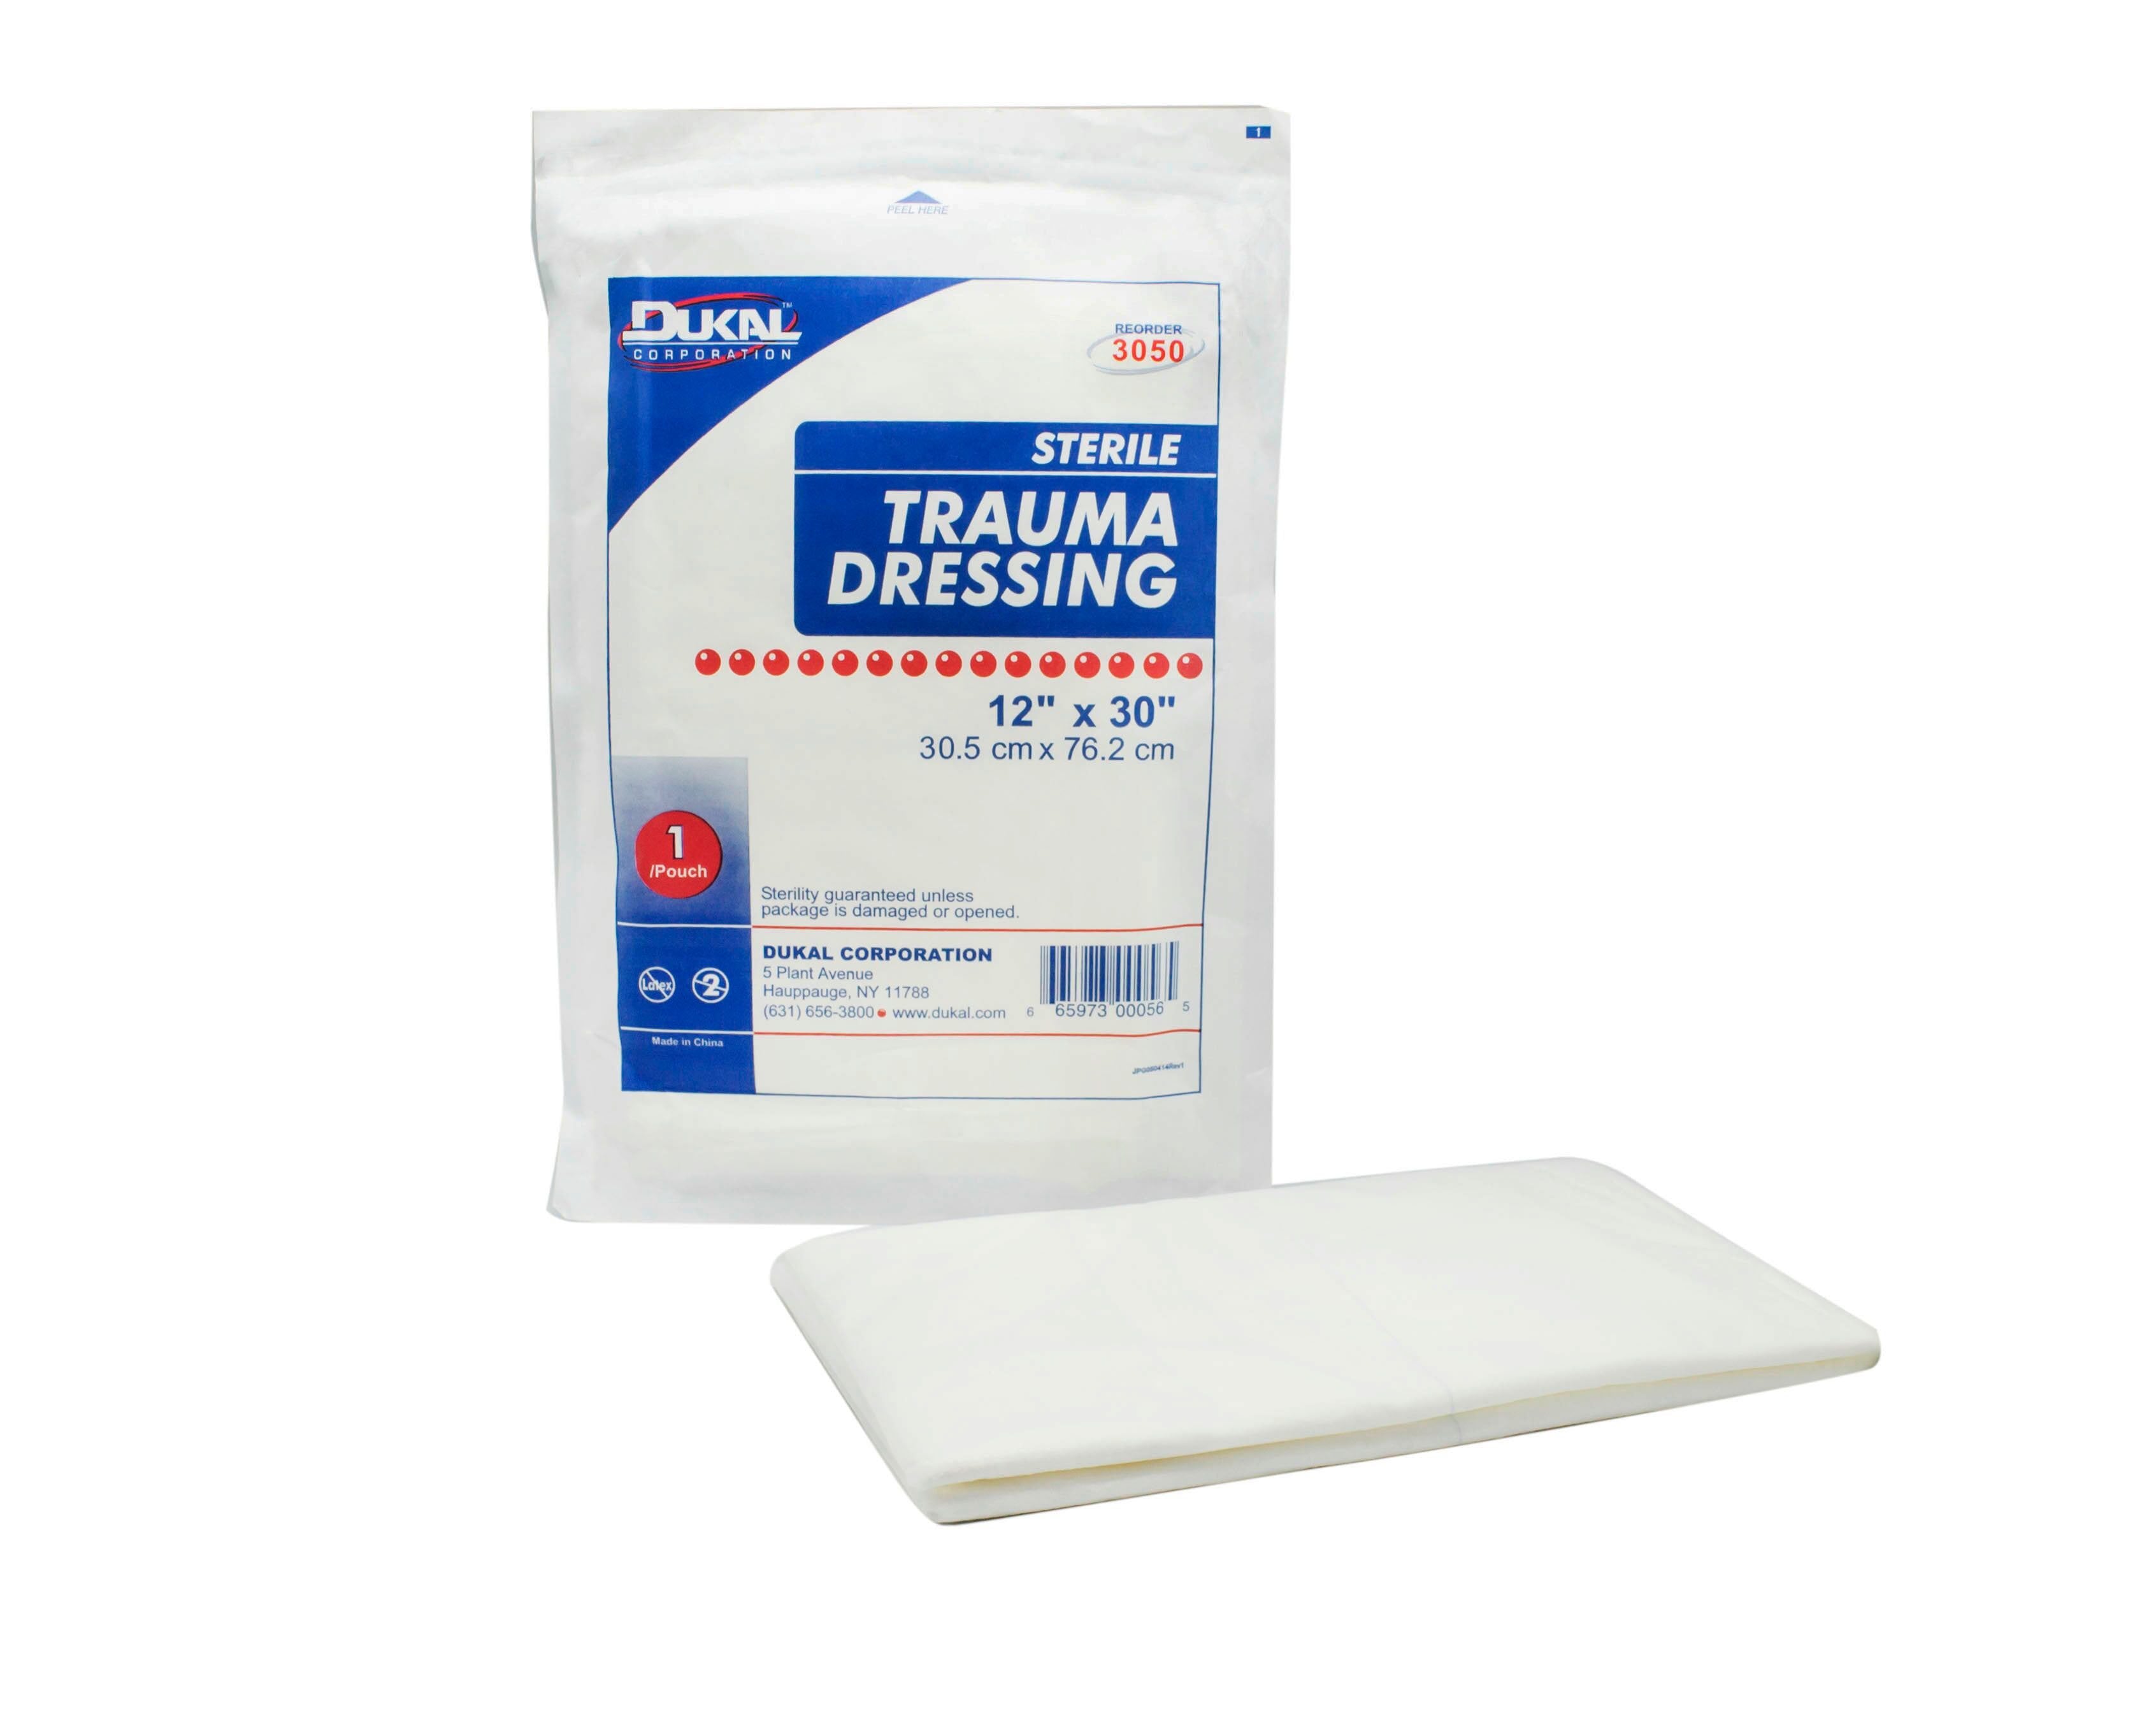 Trauma Dressing Dukal™ 12 X 30 Inch 1 per Pack Sterile Rectangle